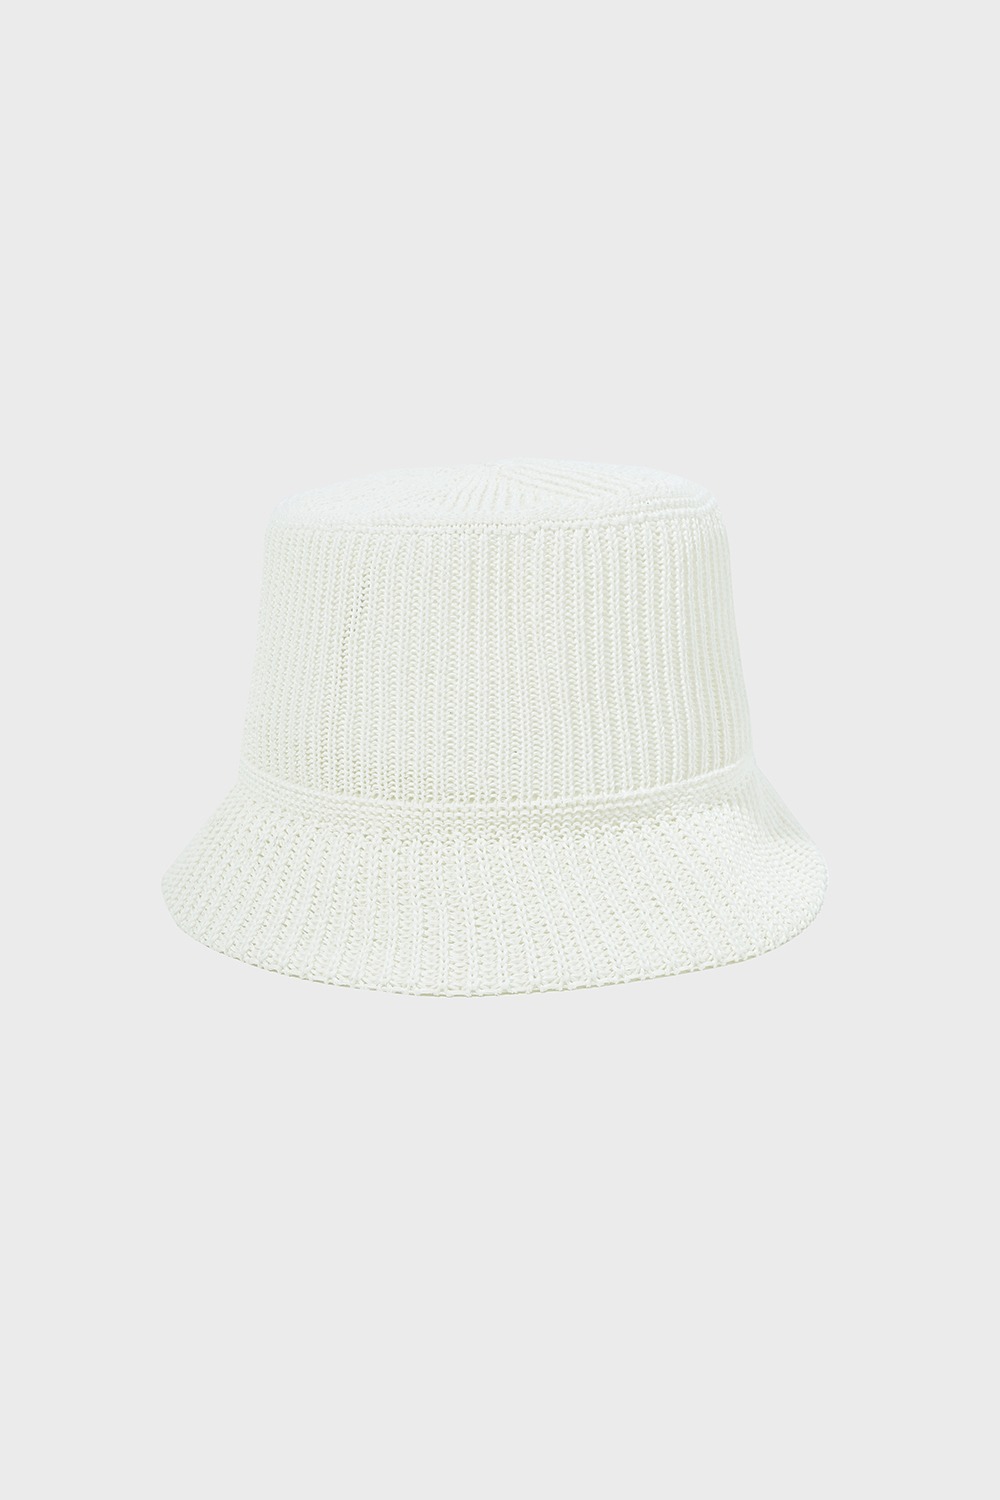 LOGO KNIT BUCKET HAT - WHITE